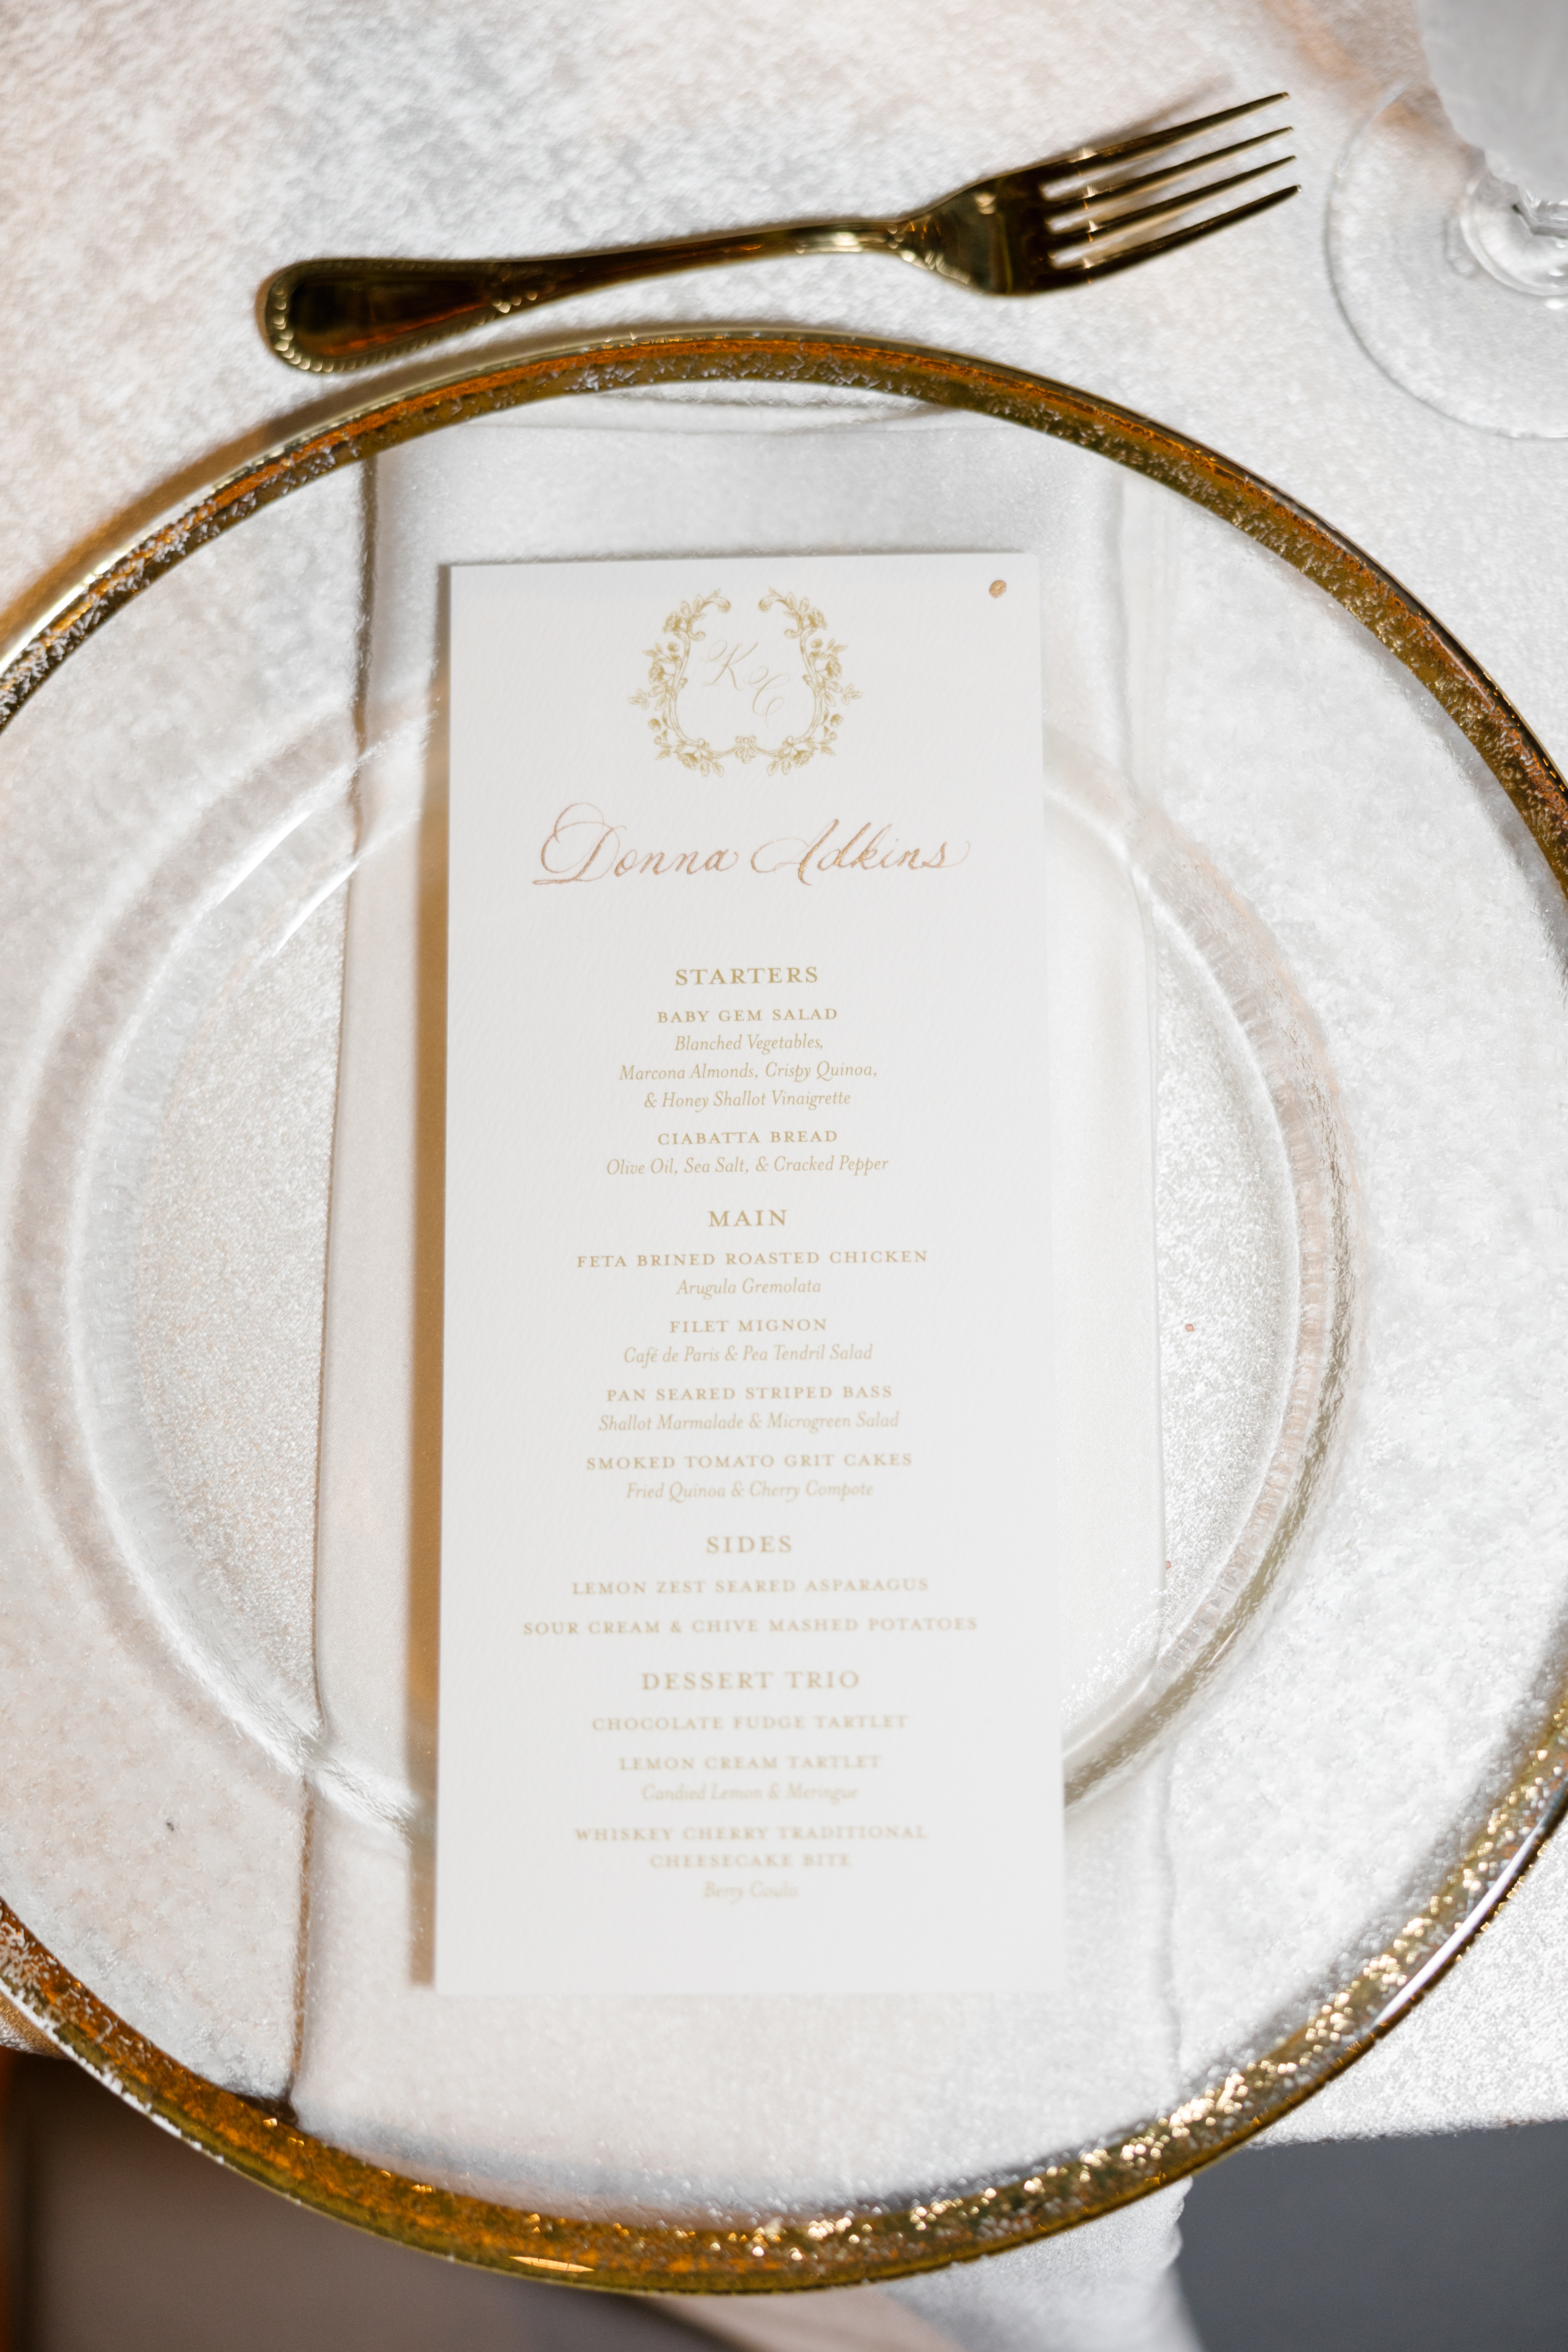 Custom dinner menu on top of gold rim plate.